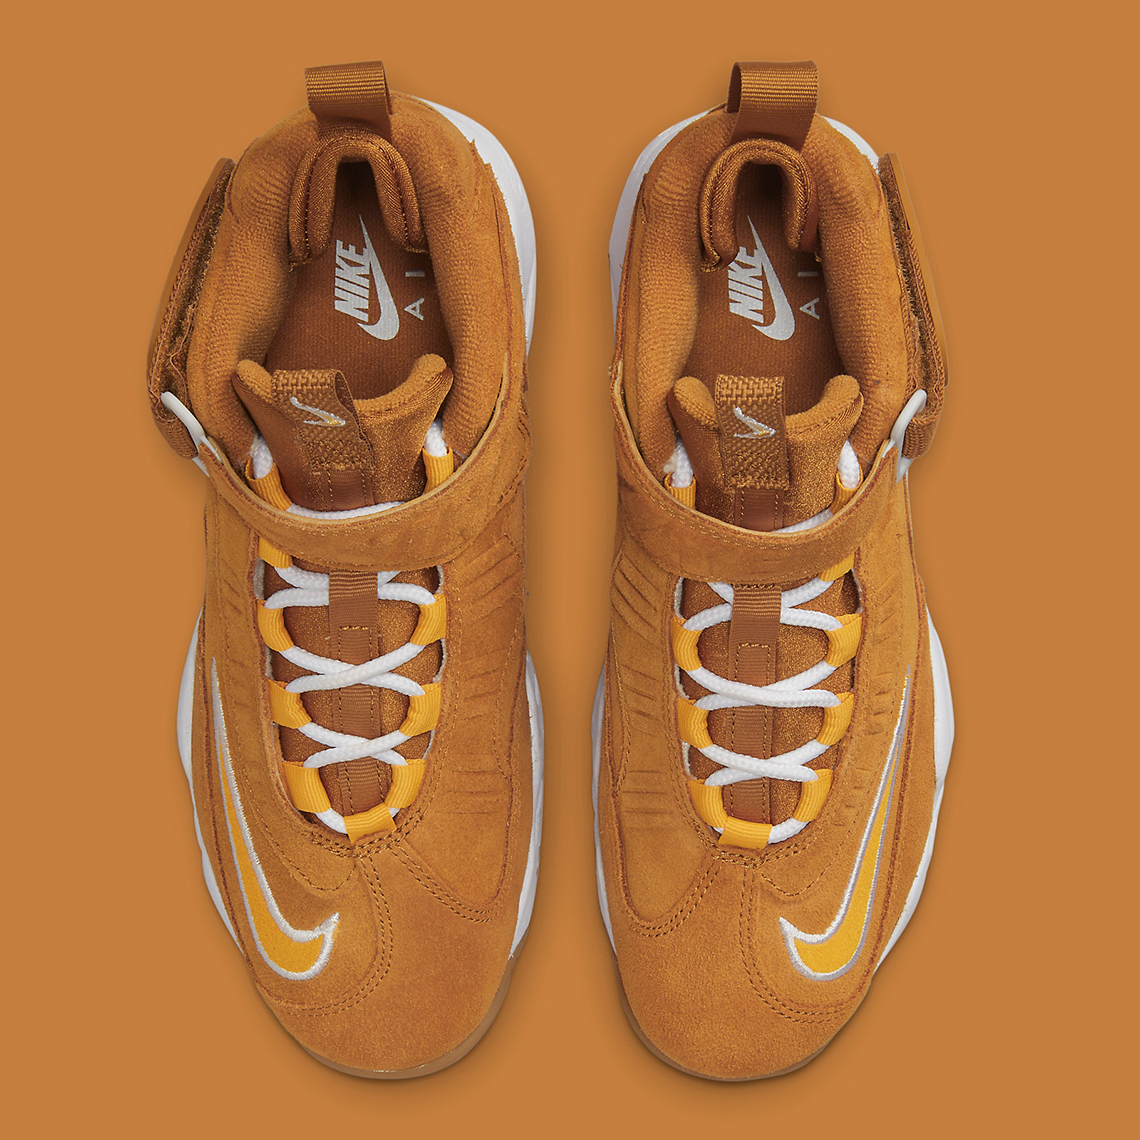 Nike nike air vortex style shoes clearance sale Wheat Do6685 700 4